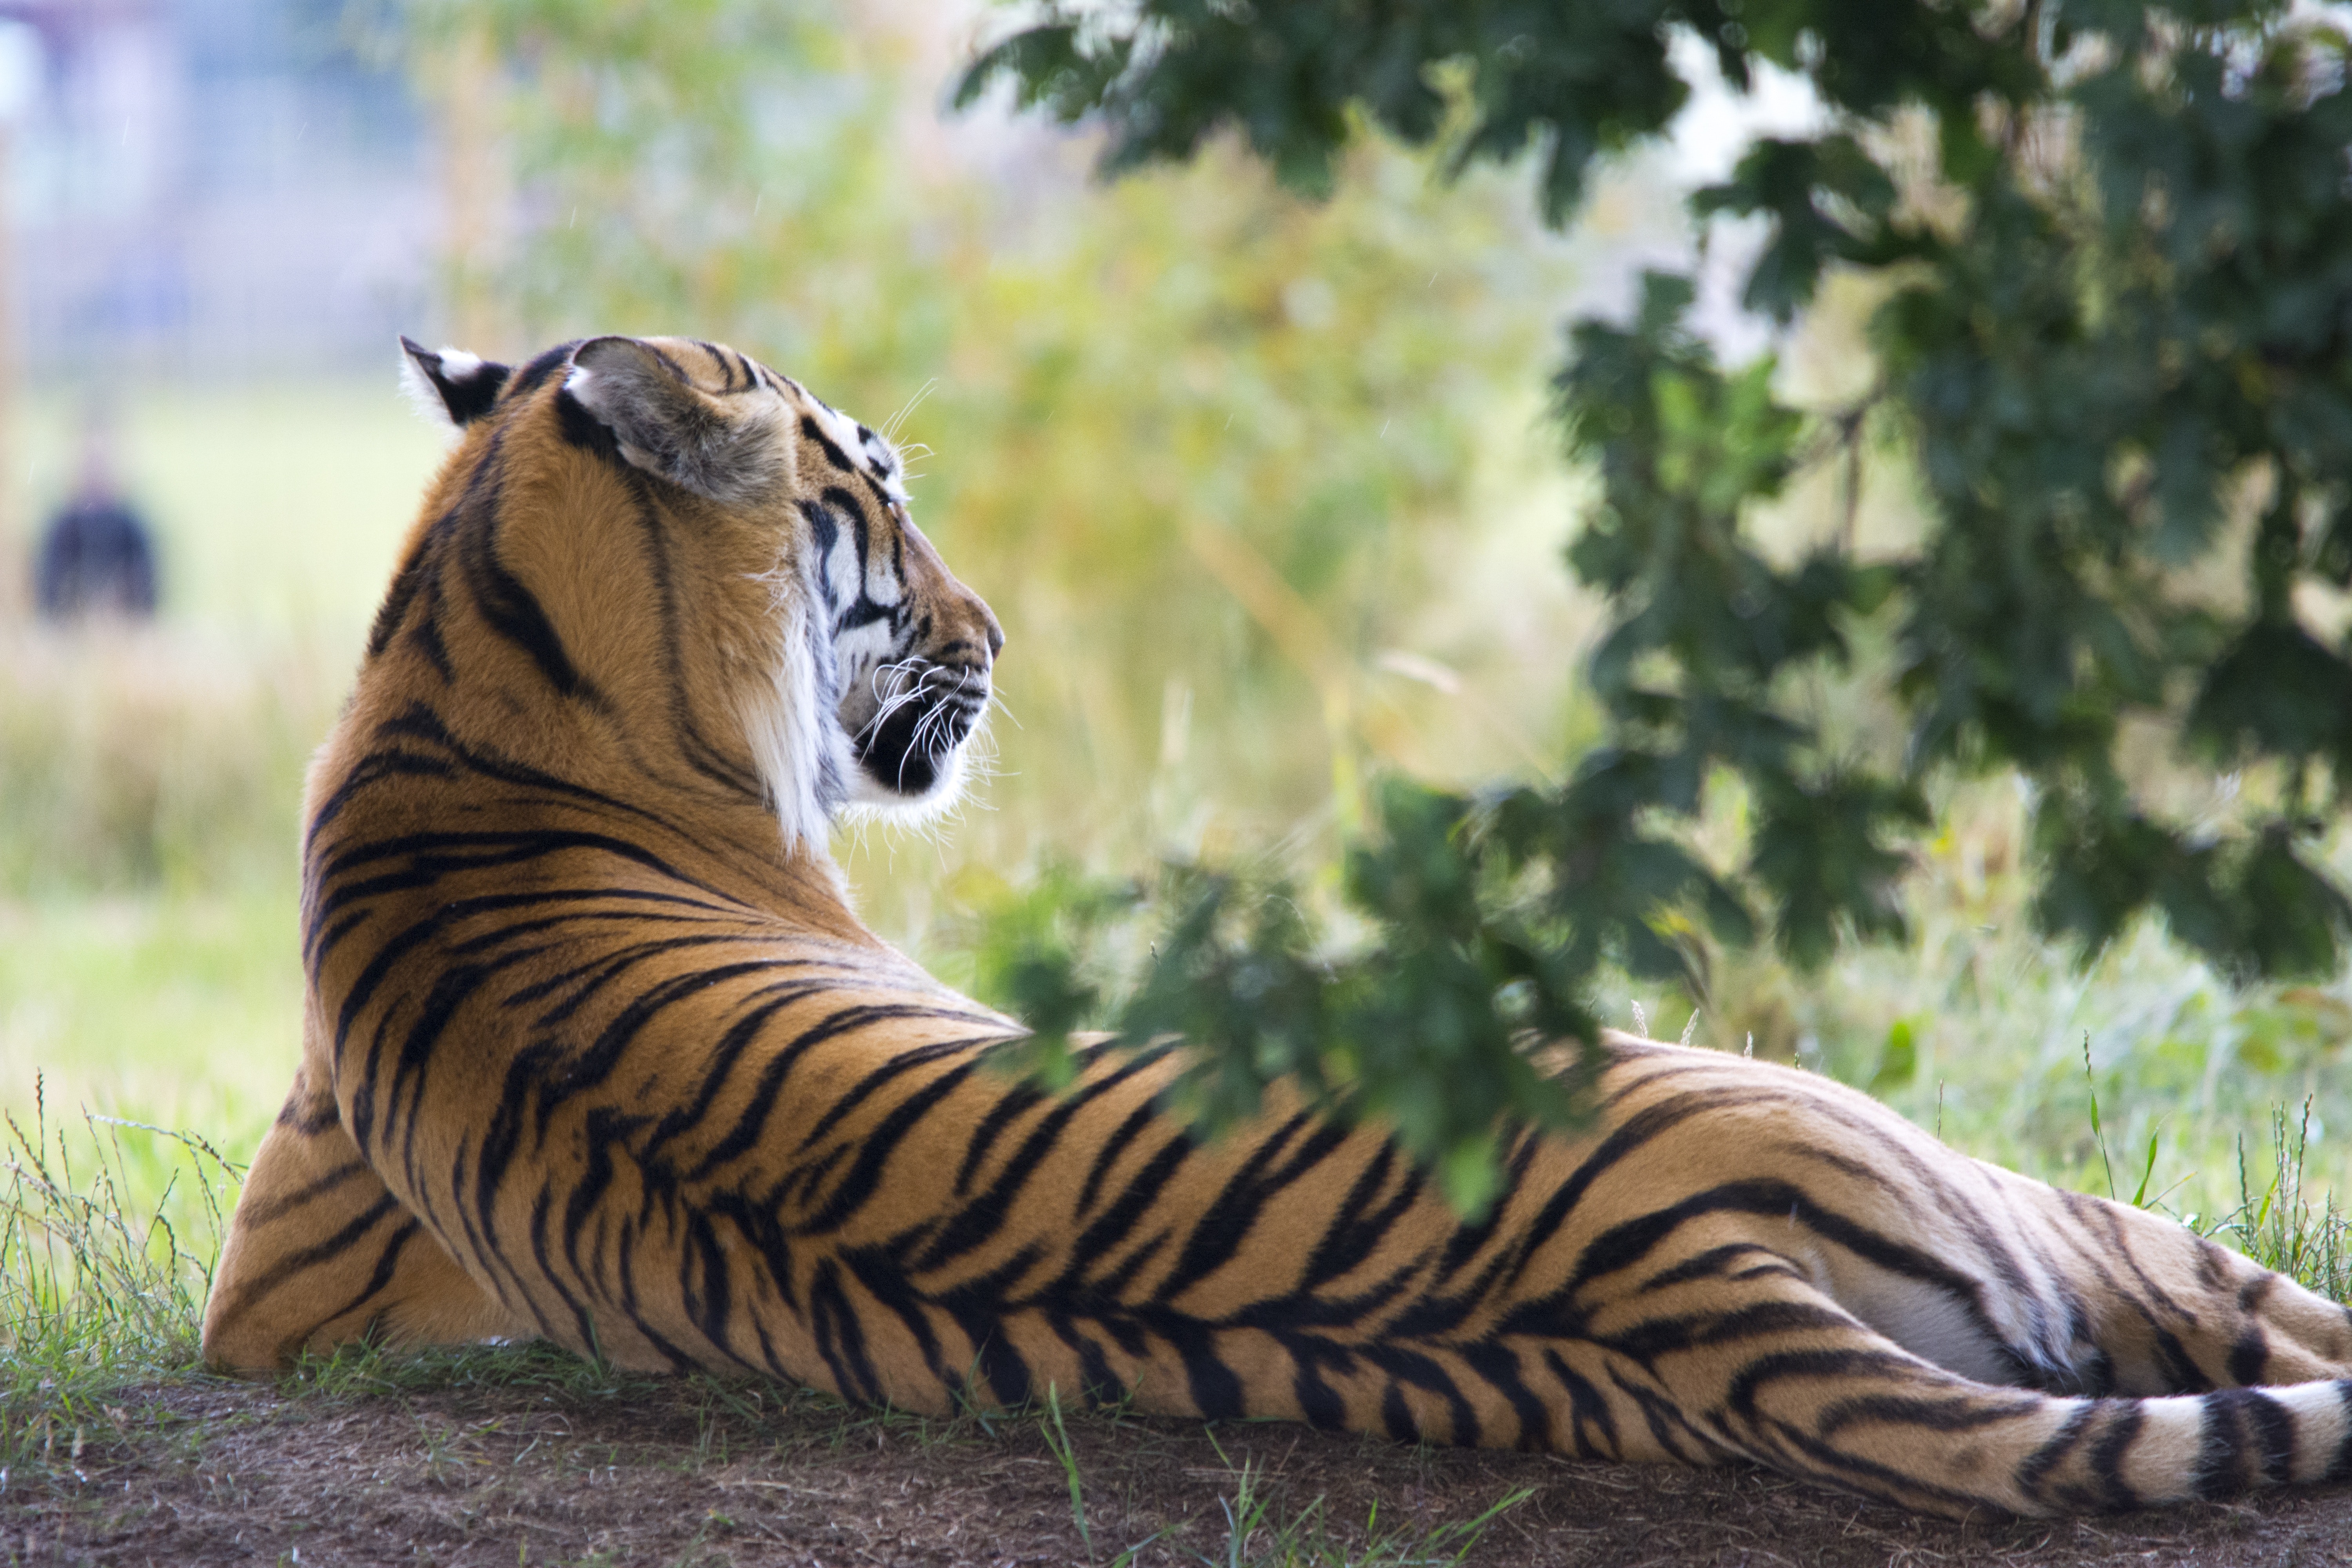 Tiger lying down during daytime photo